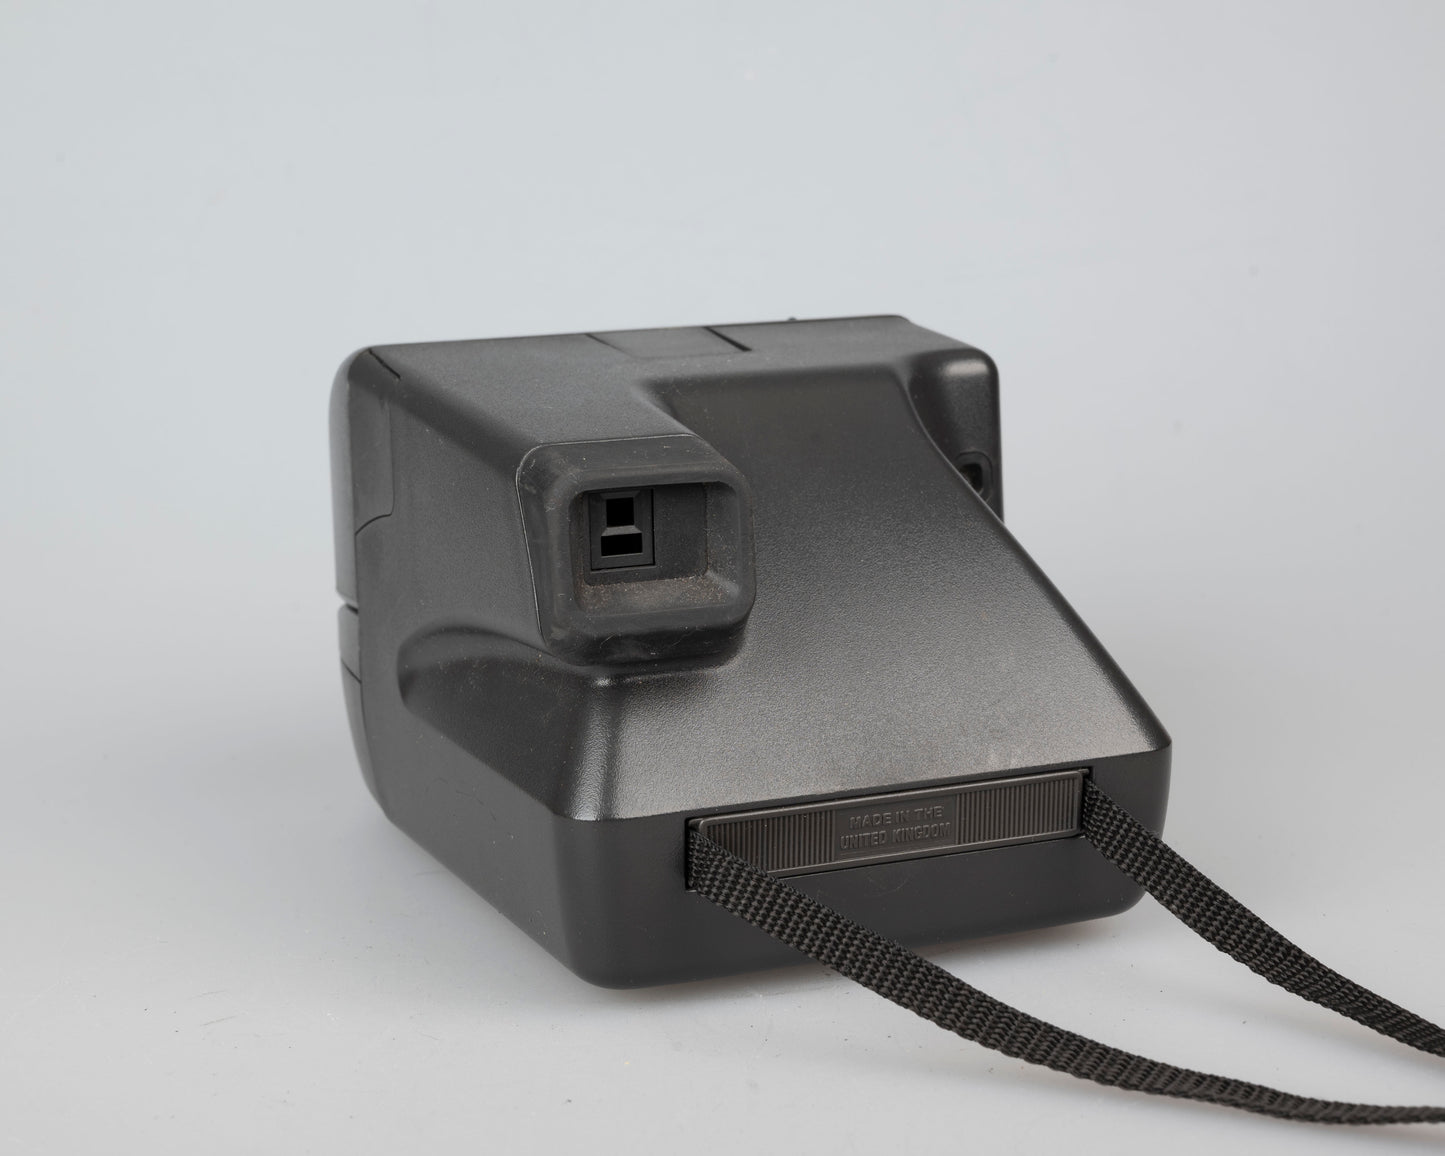 Polaroid OneStep Close-up 600 instant camera (serial F6M508VUVDDA)